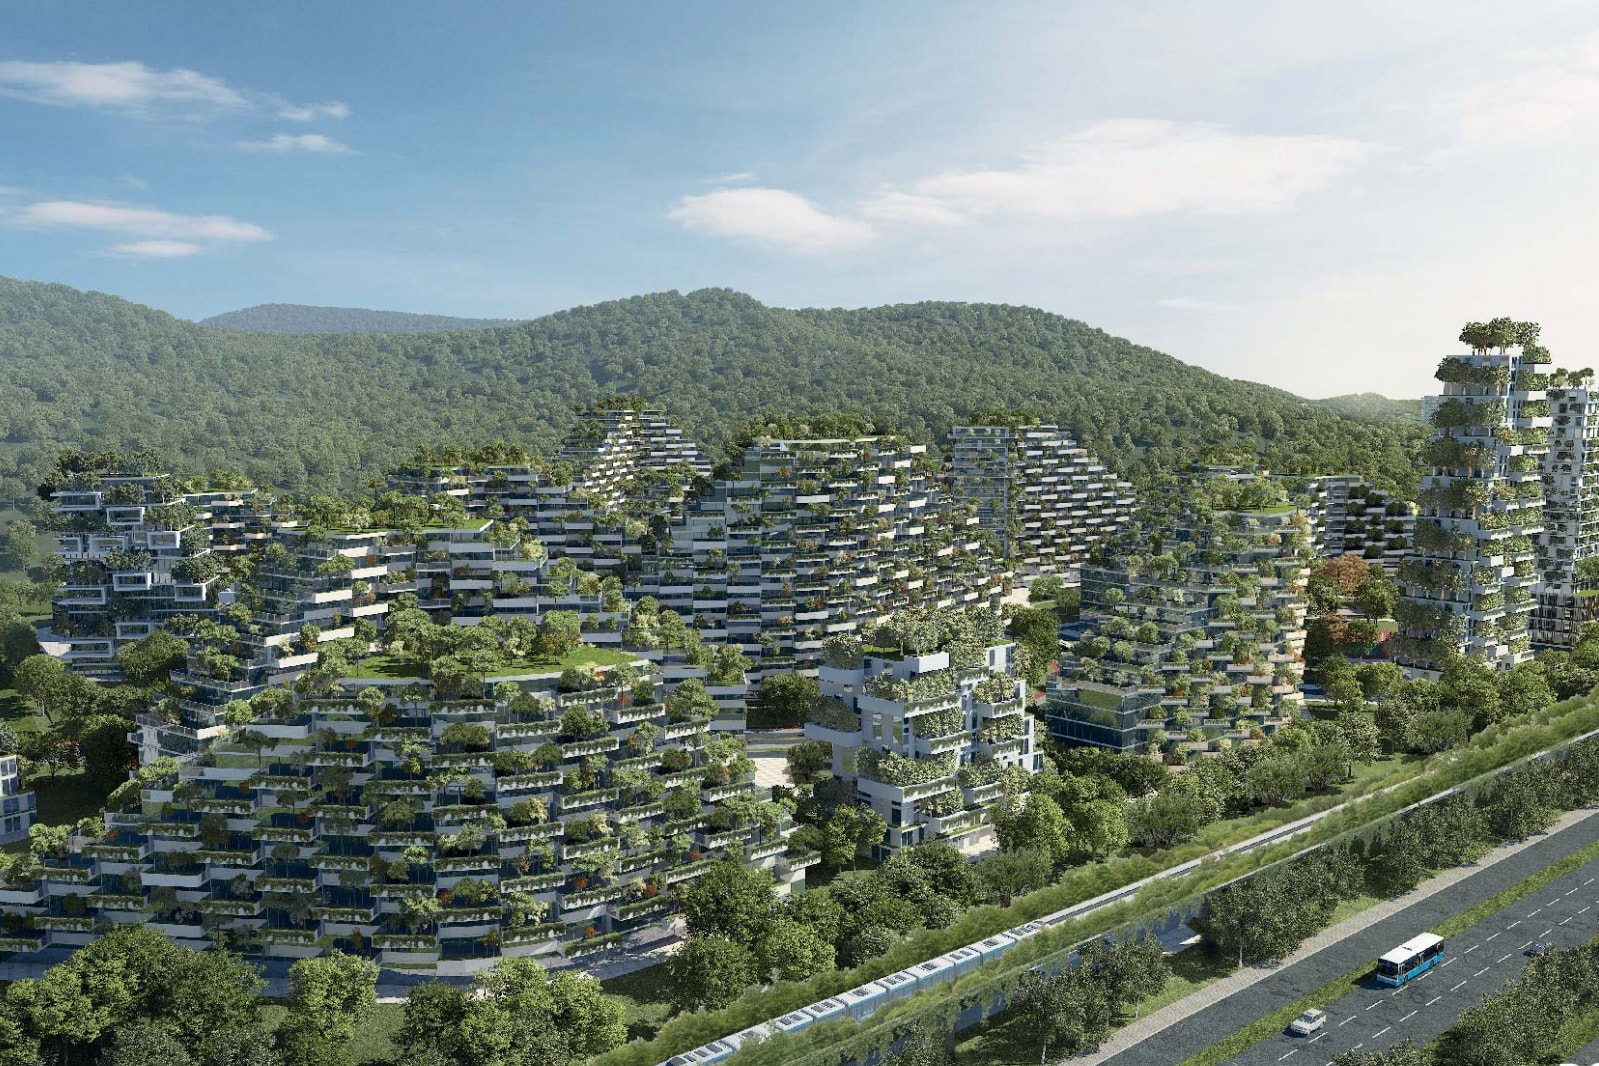 Stefano Boeri Architetti 將打造中國首個「森林城市」